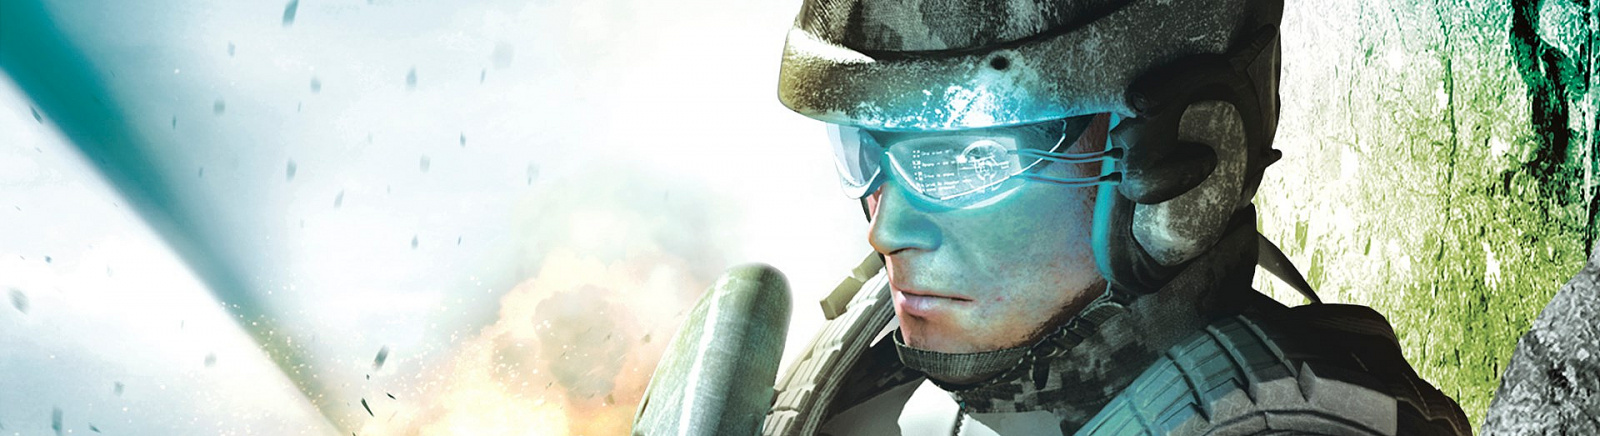 Дата выхода Tom Clancy's Ghost Recon: Advanced Warfighter 2 (2007) (GRAW2)  на PC, PS3 и Xbox 360 в России и во всем мире